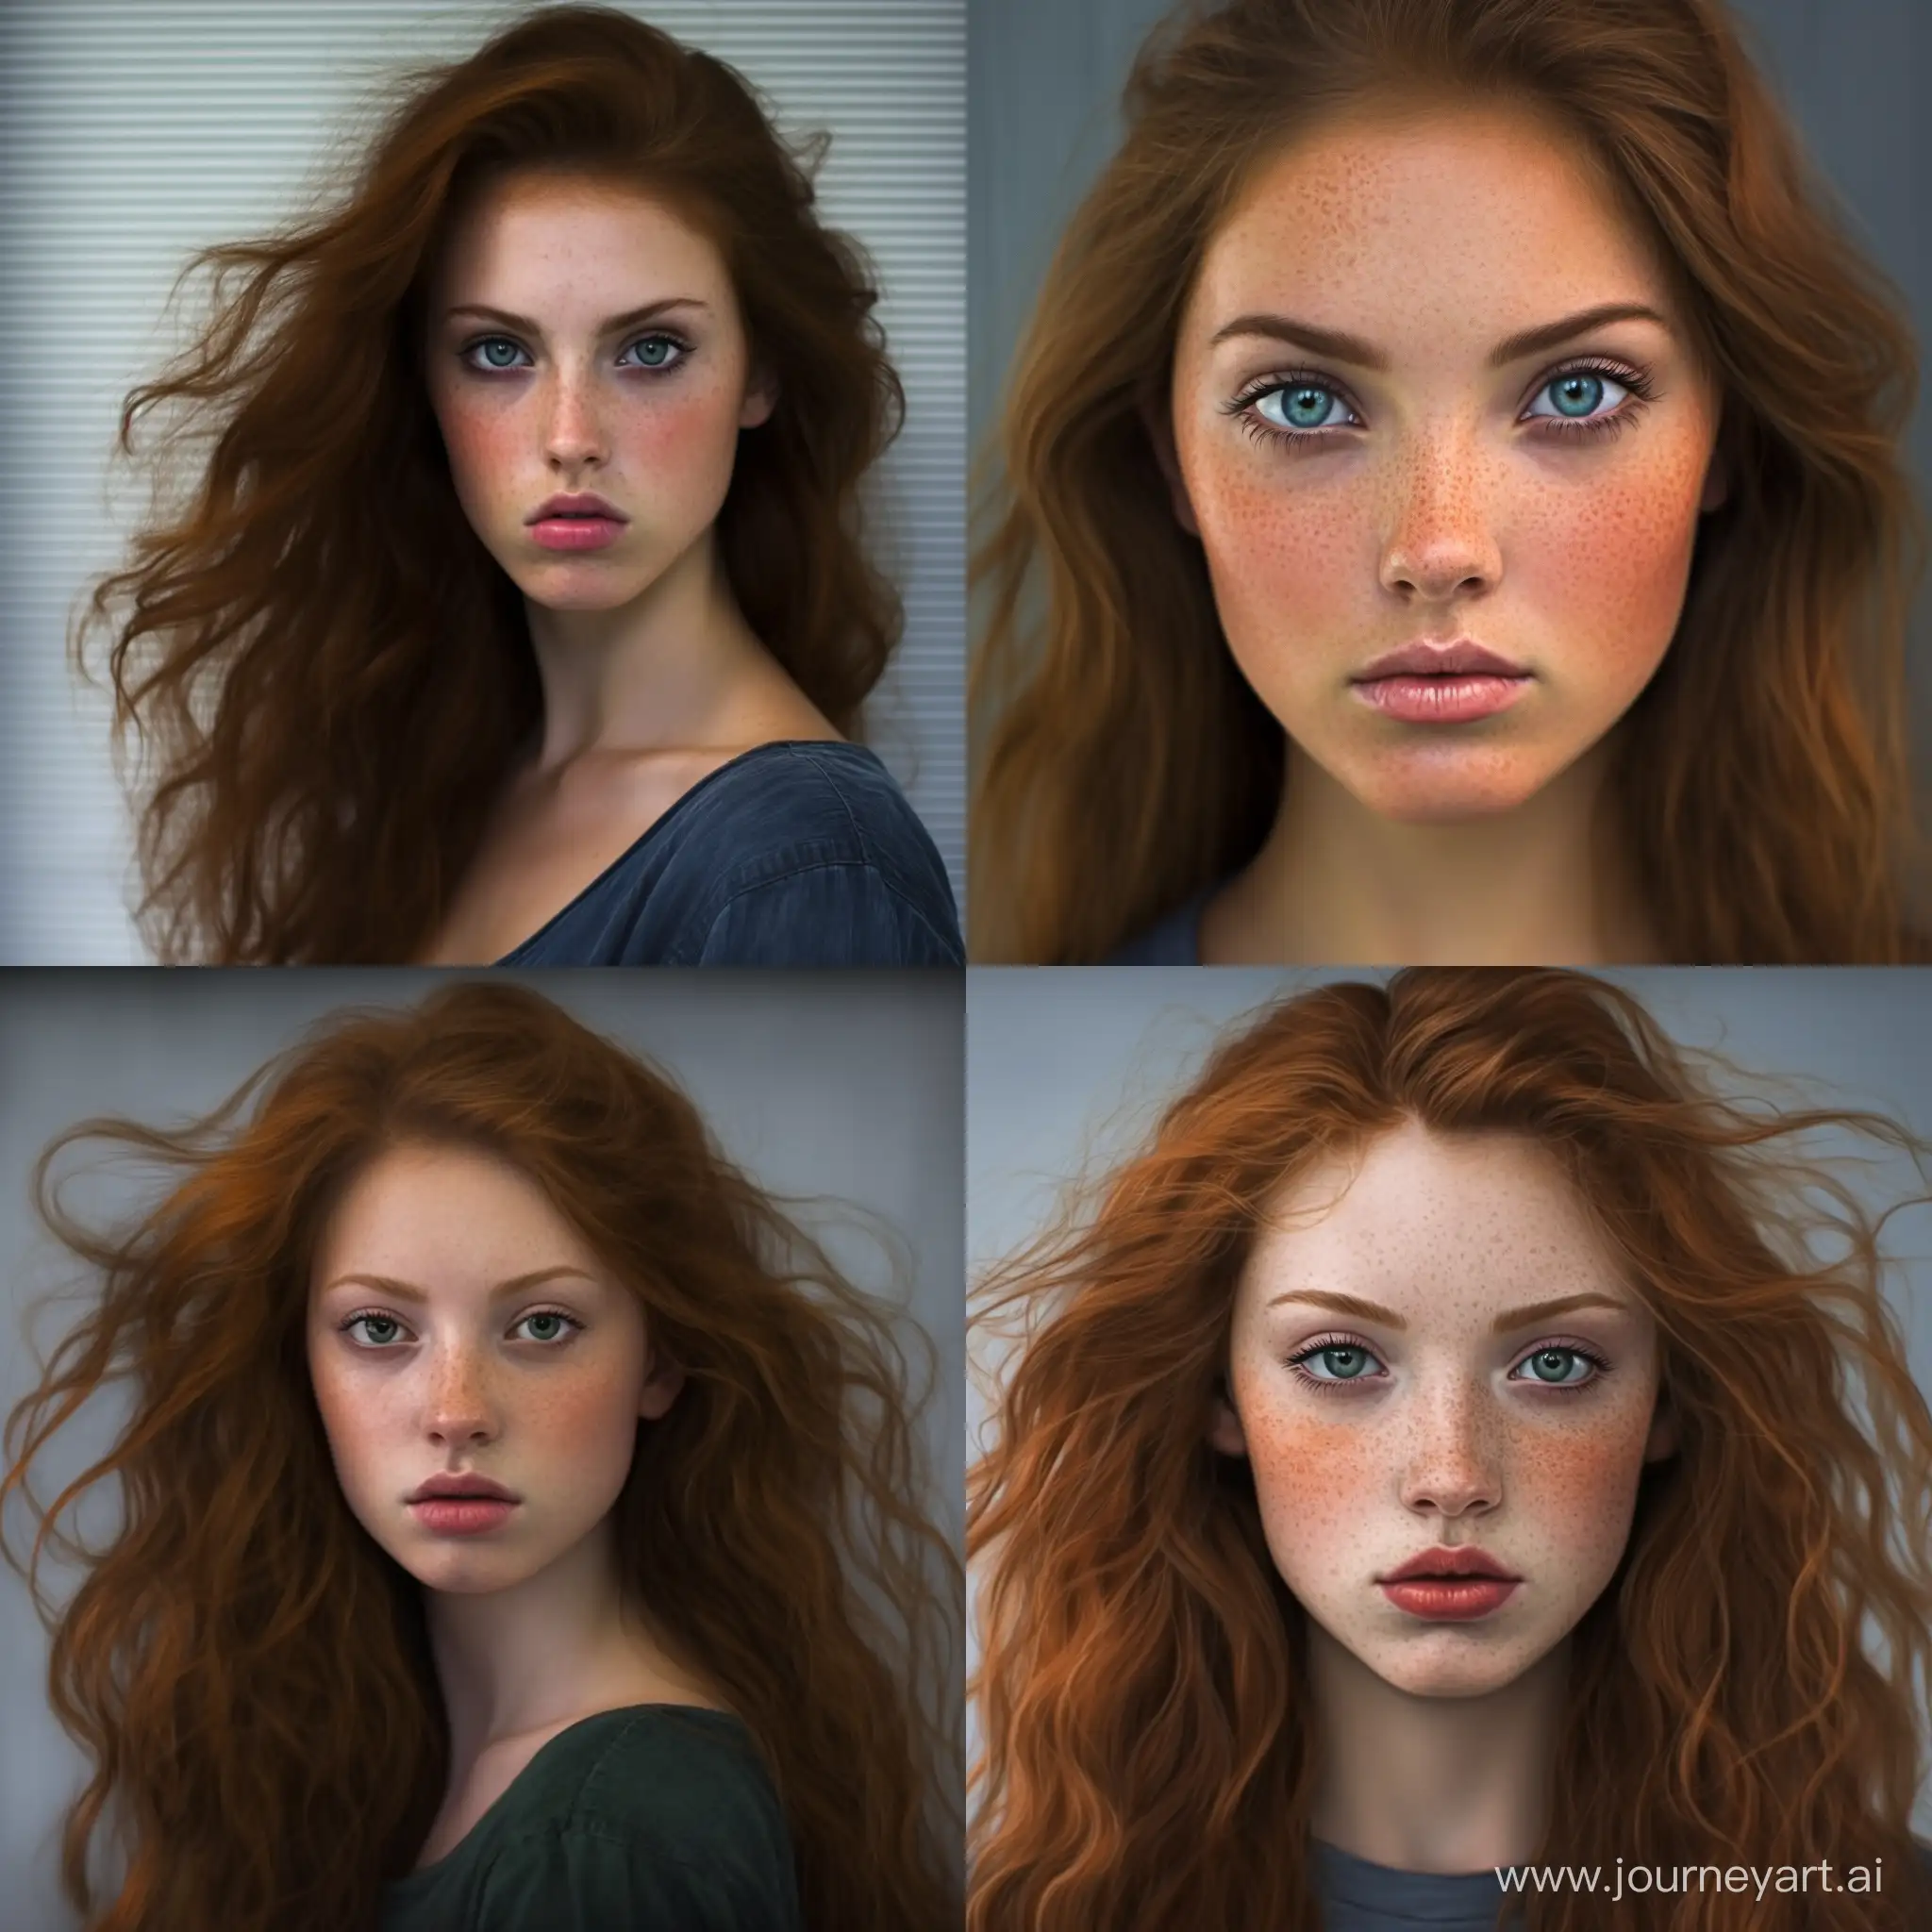 UltraRealistic-Portrait-Photography-Captivating-23YearOld-Woman